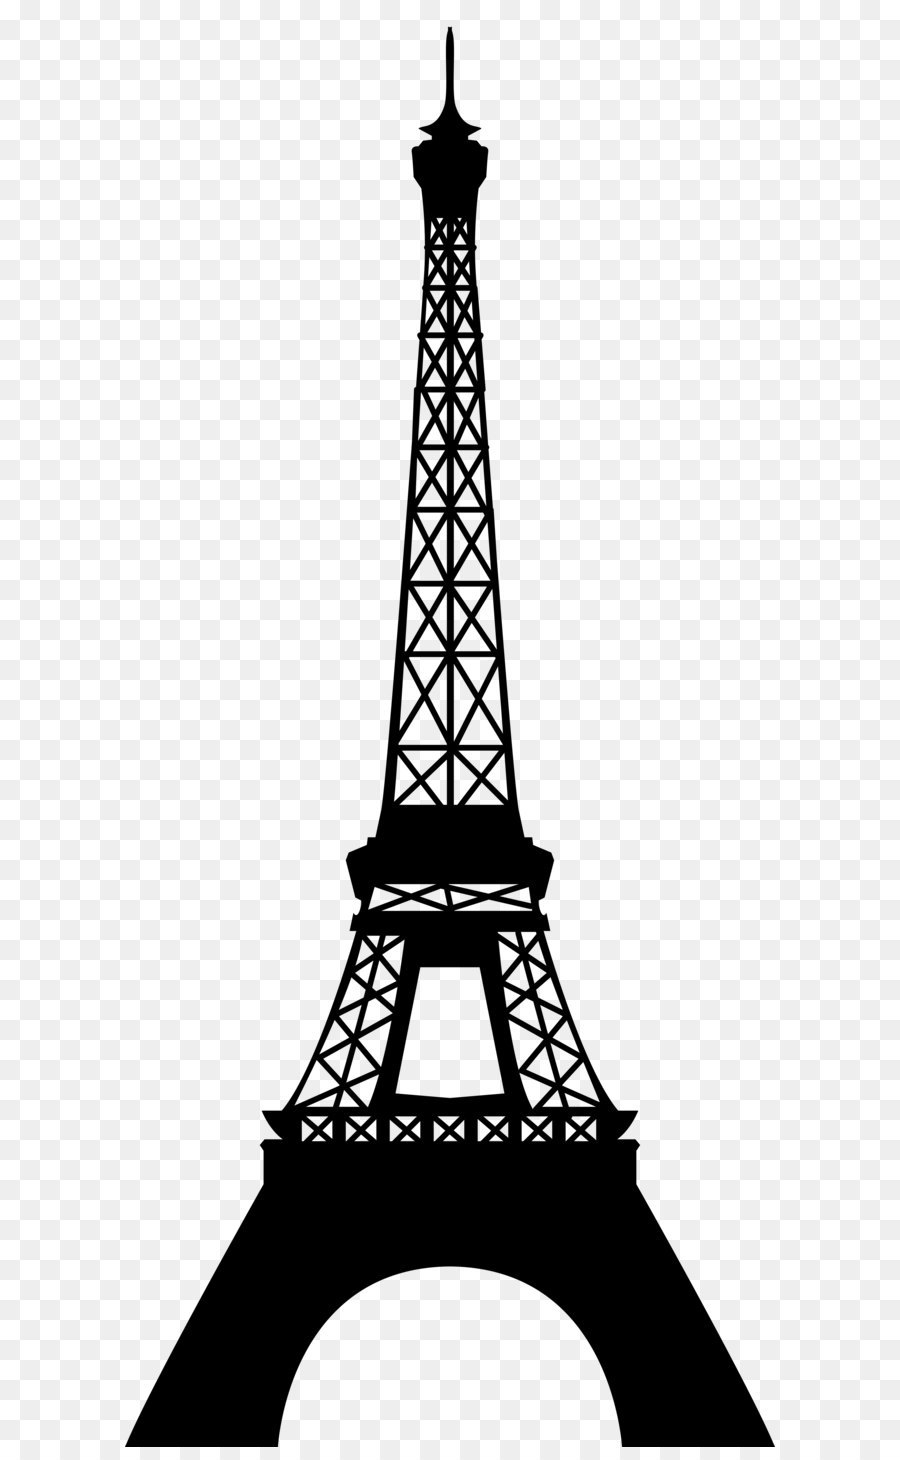 Eiffel Tower Clip art - Eiffel Tower Silhouette Transparent PNG Clip Art Image png download - 3593*8000 - Free Transparent Eiffel Tower png Download.